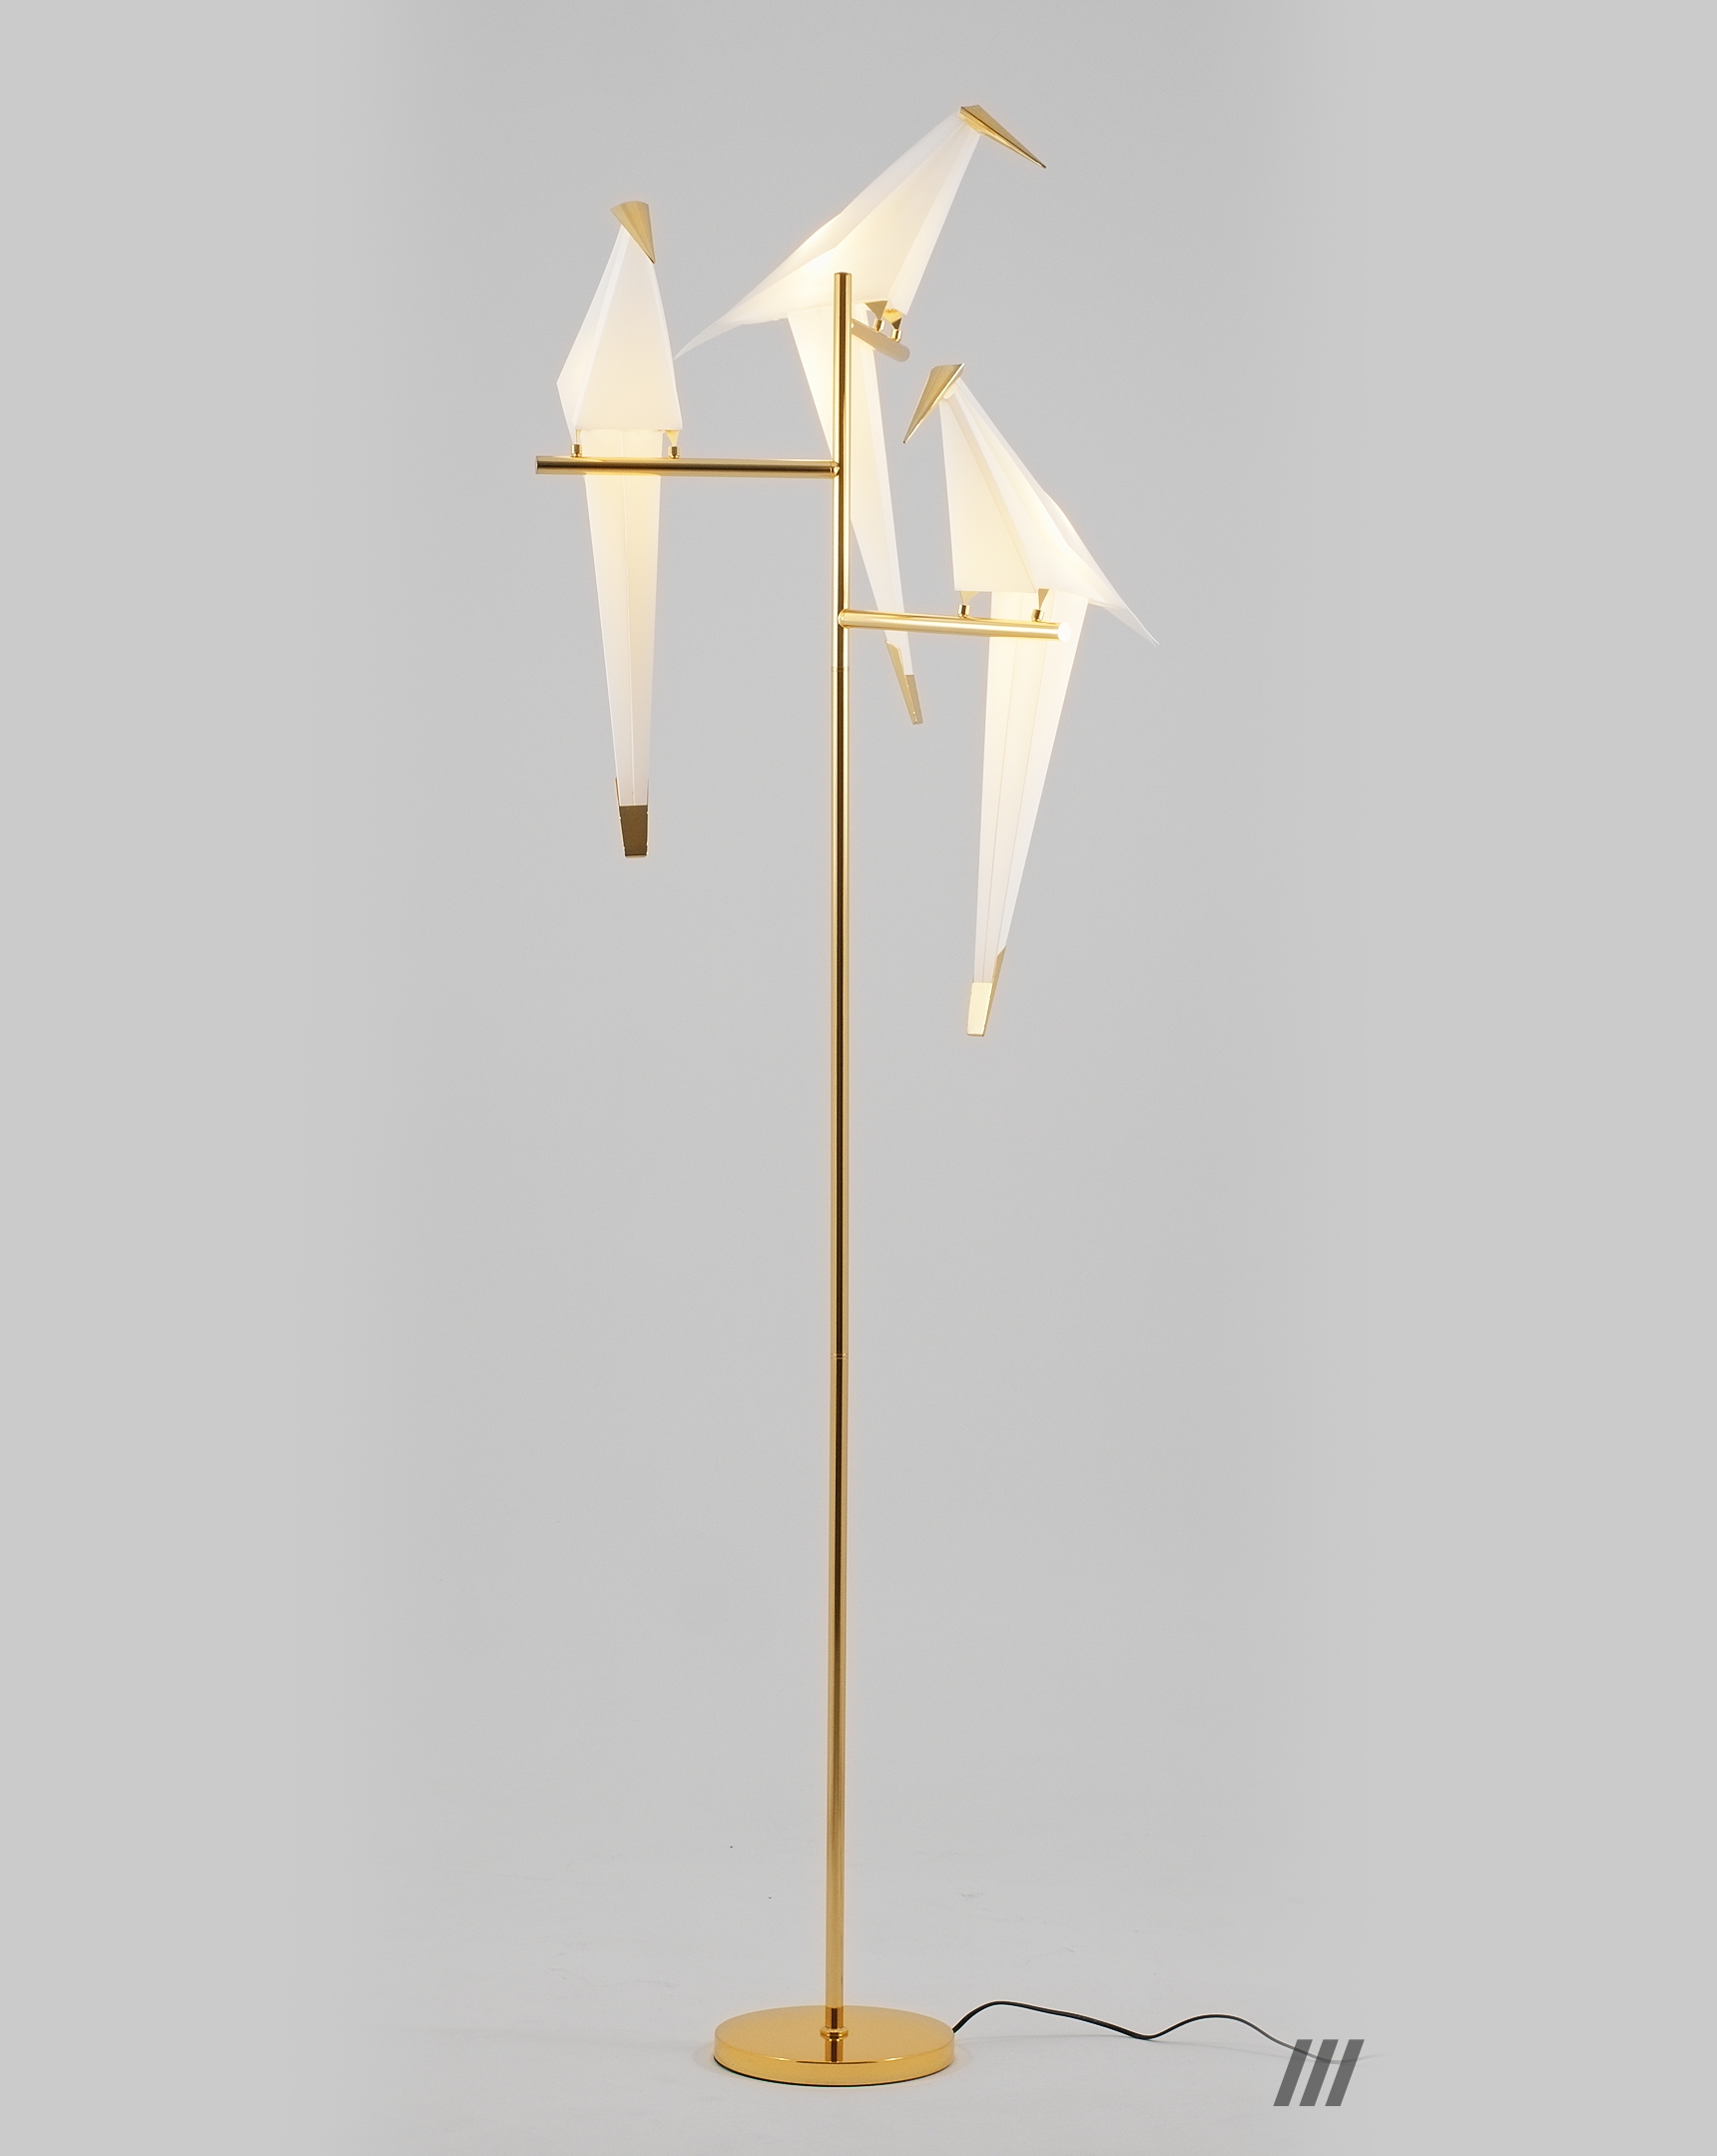 Светодиодный торшер Moderli V3075-3FL origami Birds 3*LED*6W